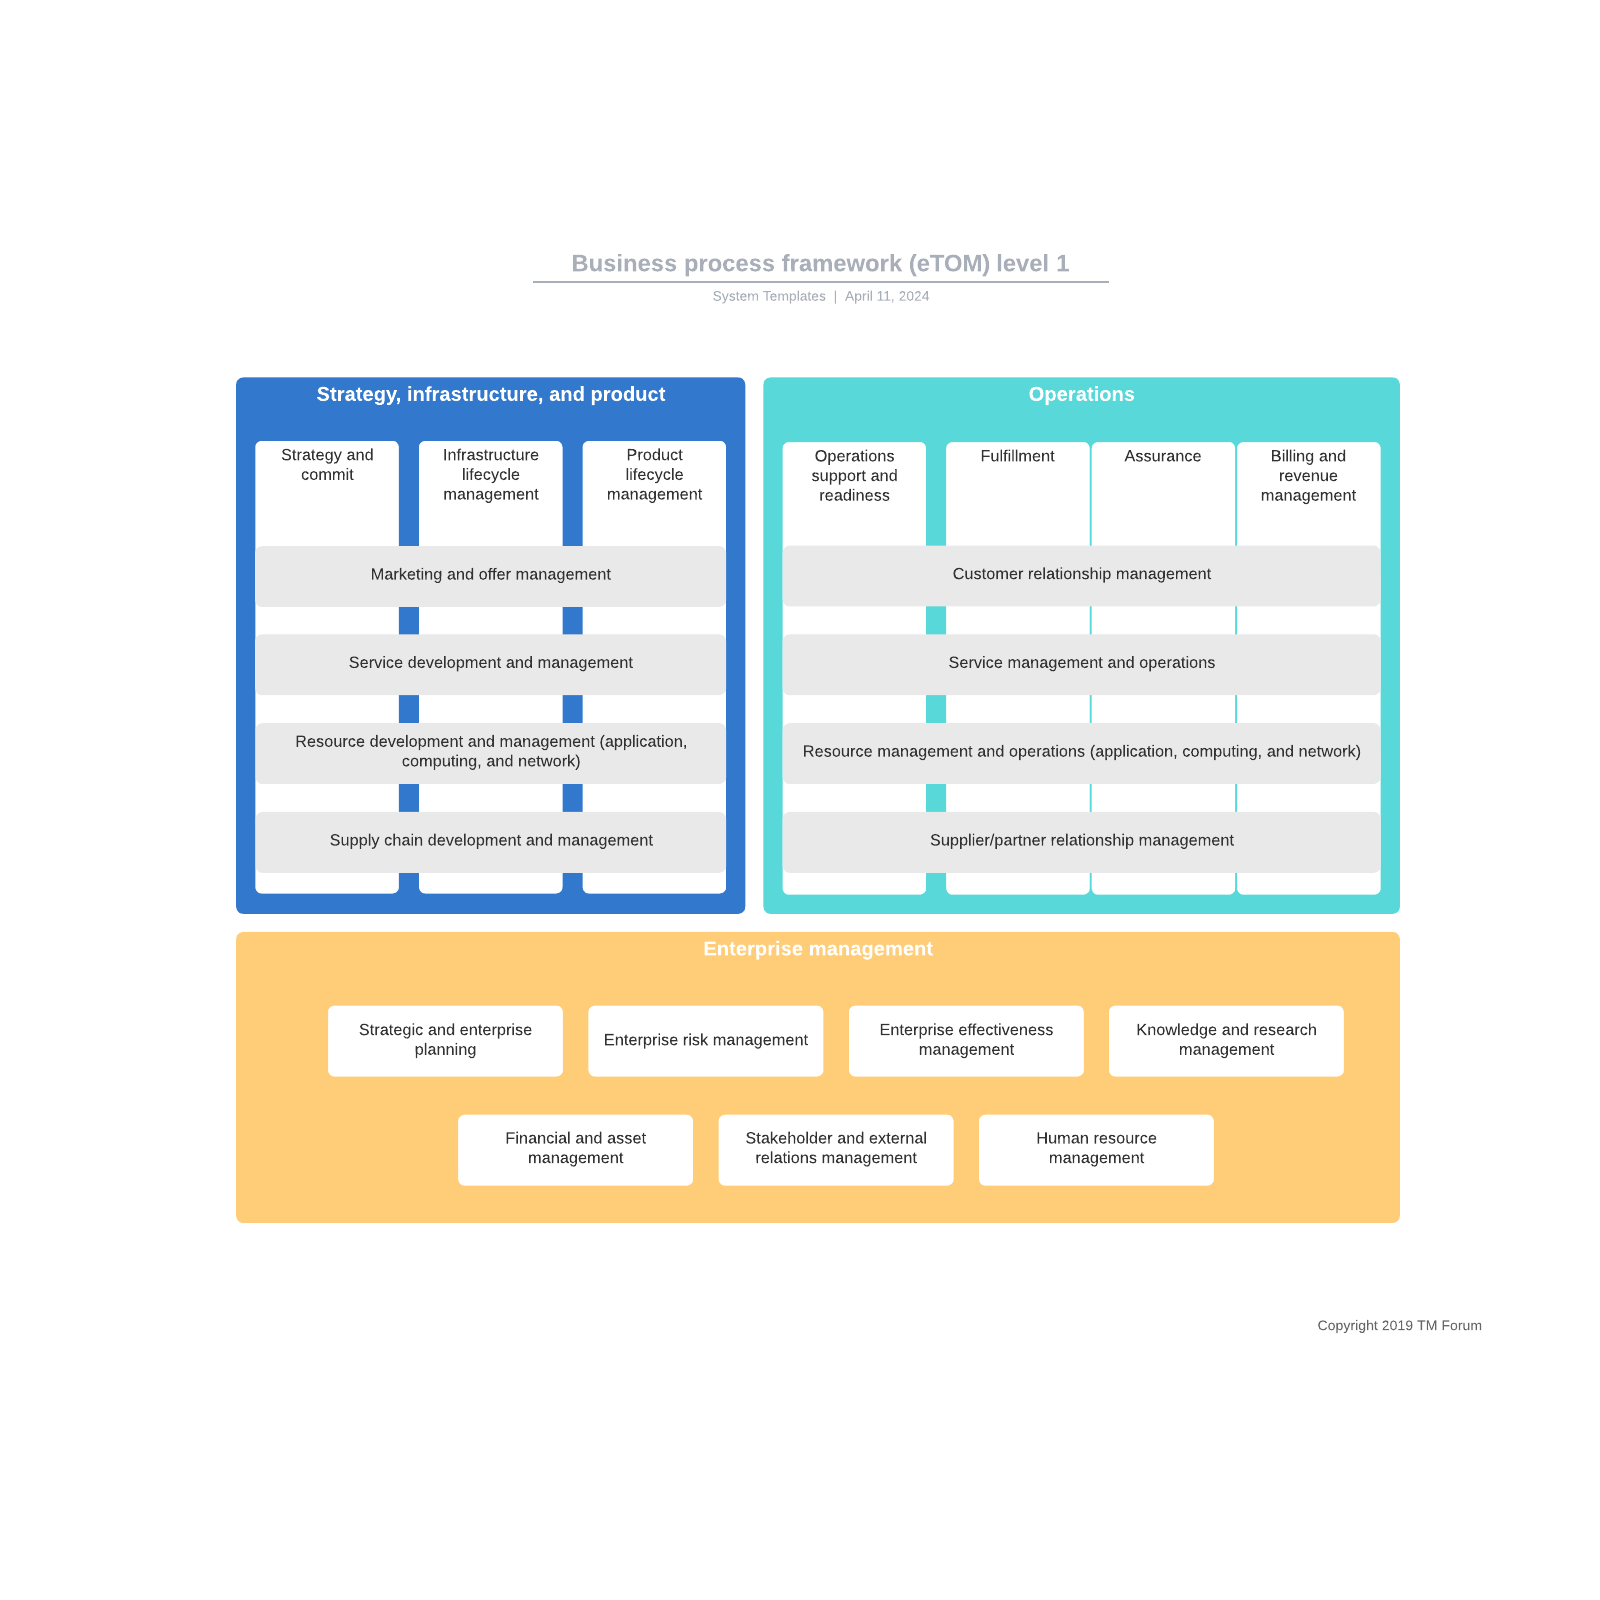 Business process framework (eTOM) level 1 example